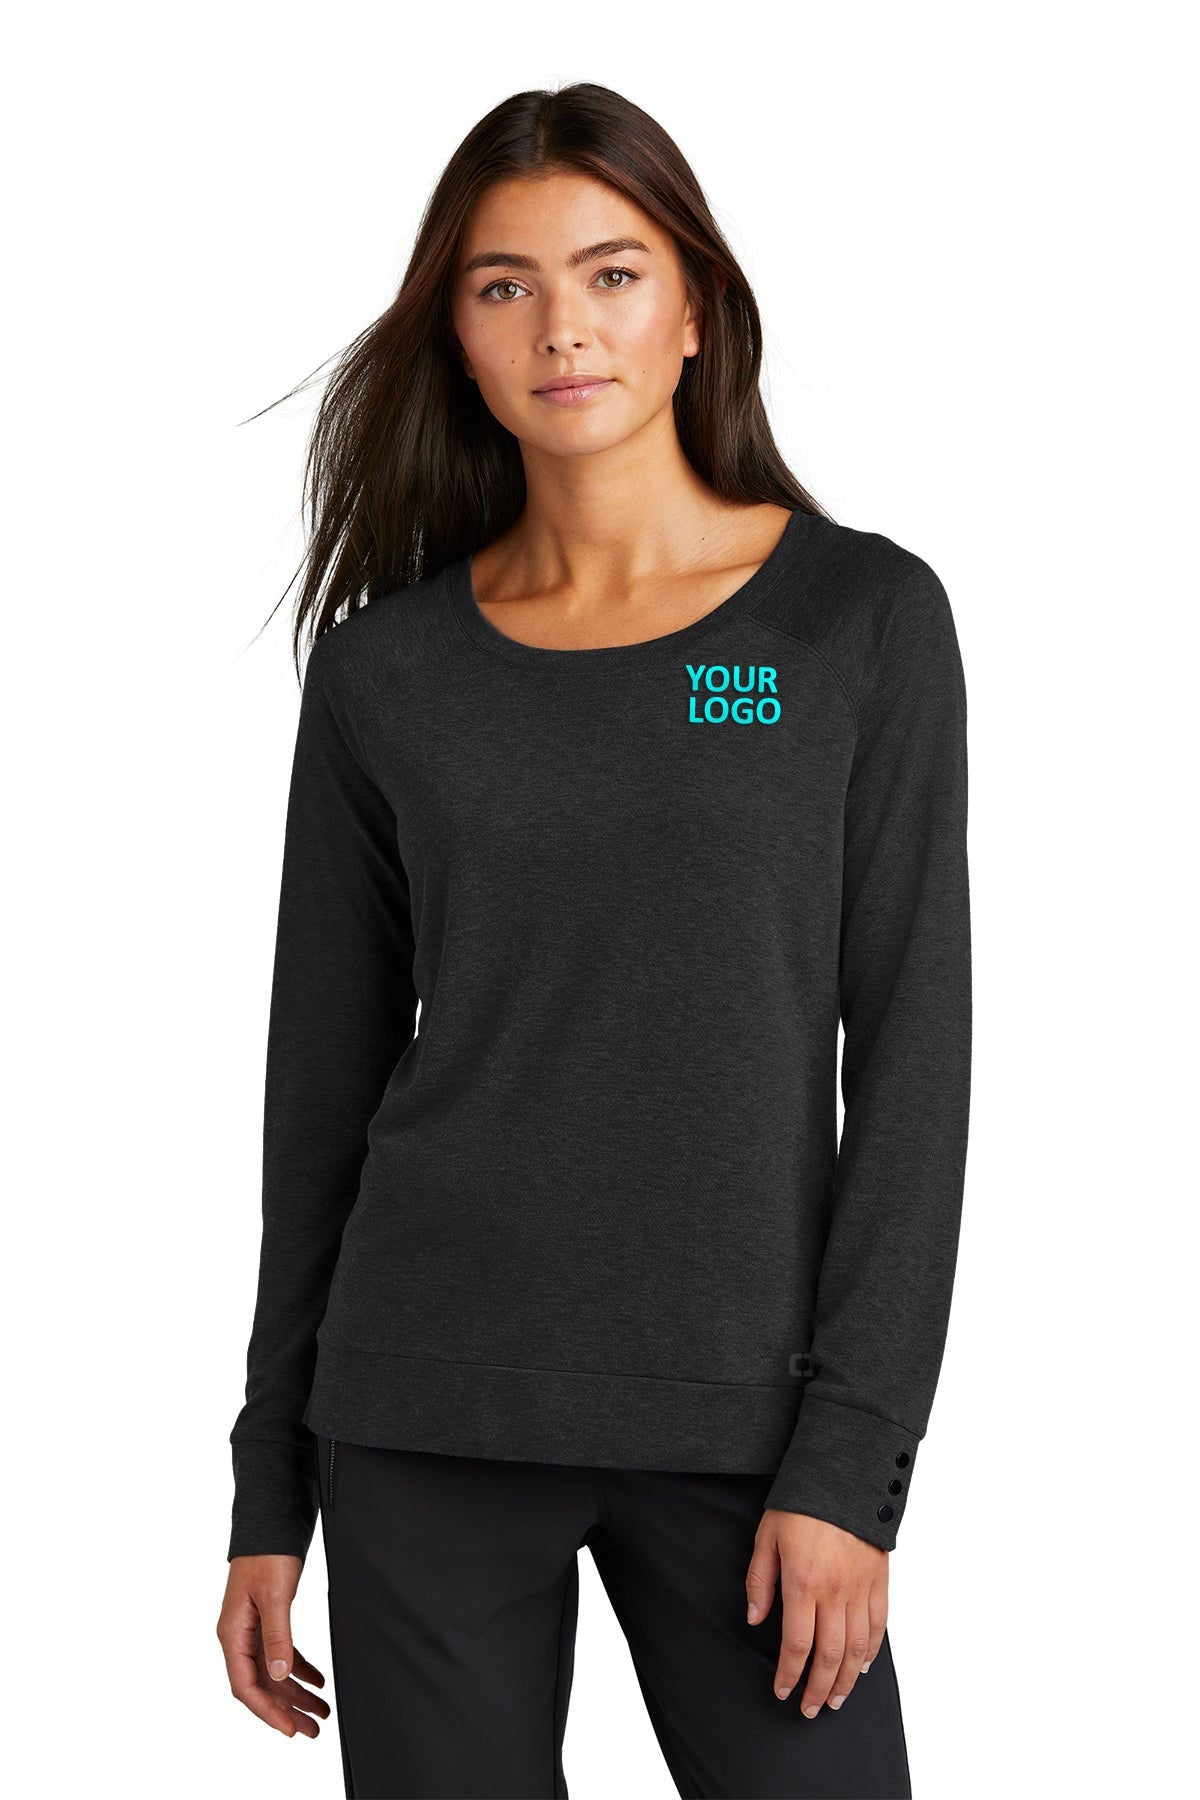 OGIO Blacktop LOG150 custom logo sweatshirts